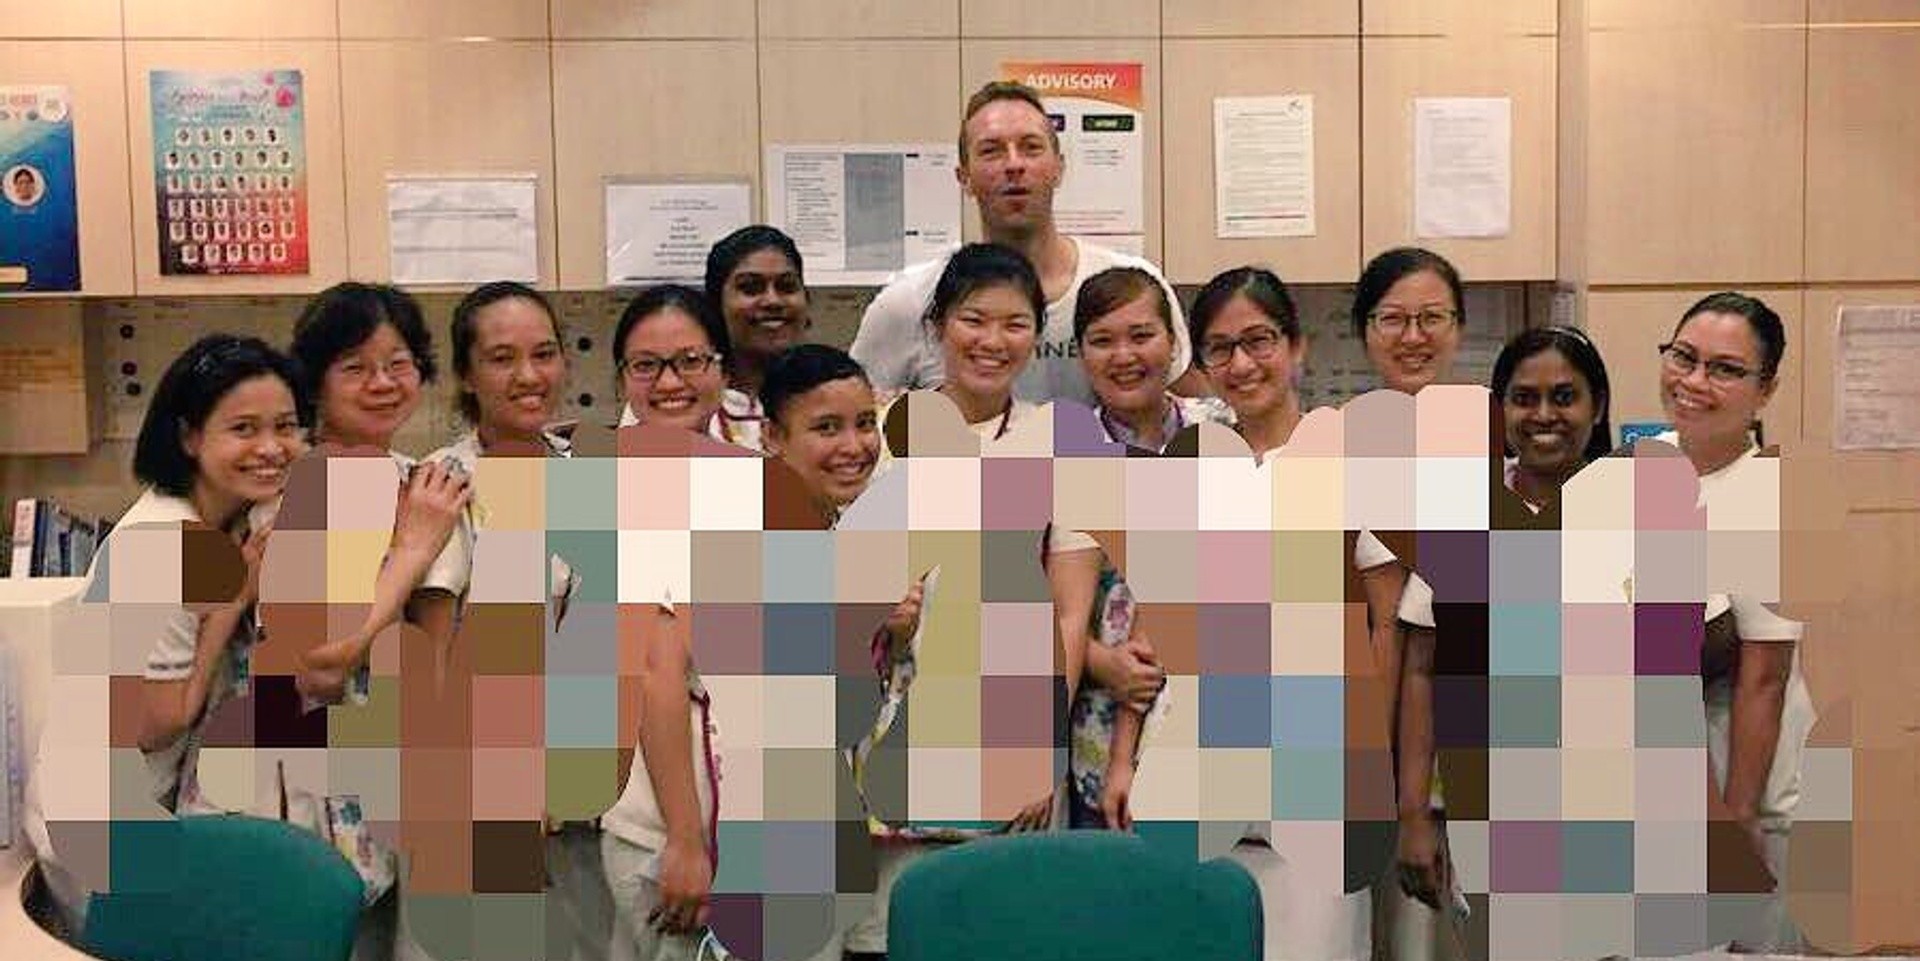 Coldplay's Chris Martin confirms good guy status, visited KK Hospital in Singapore